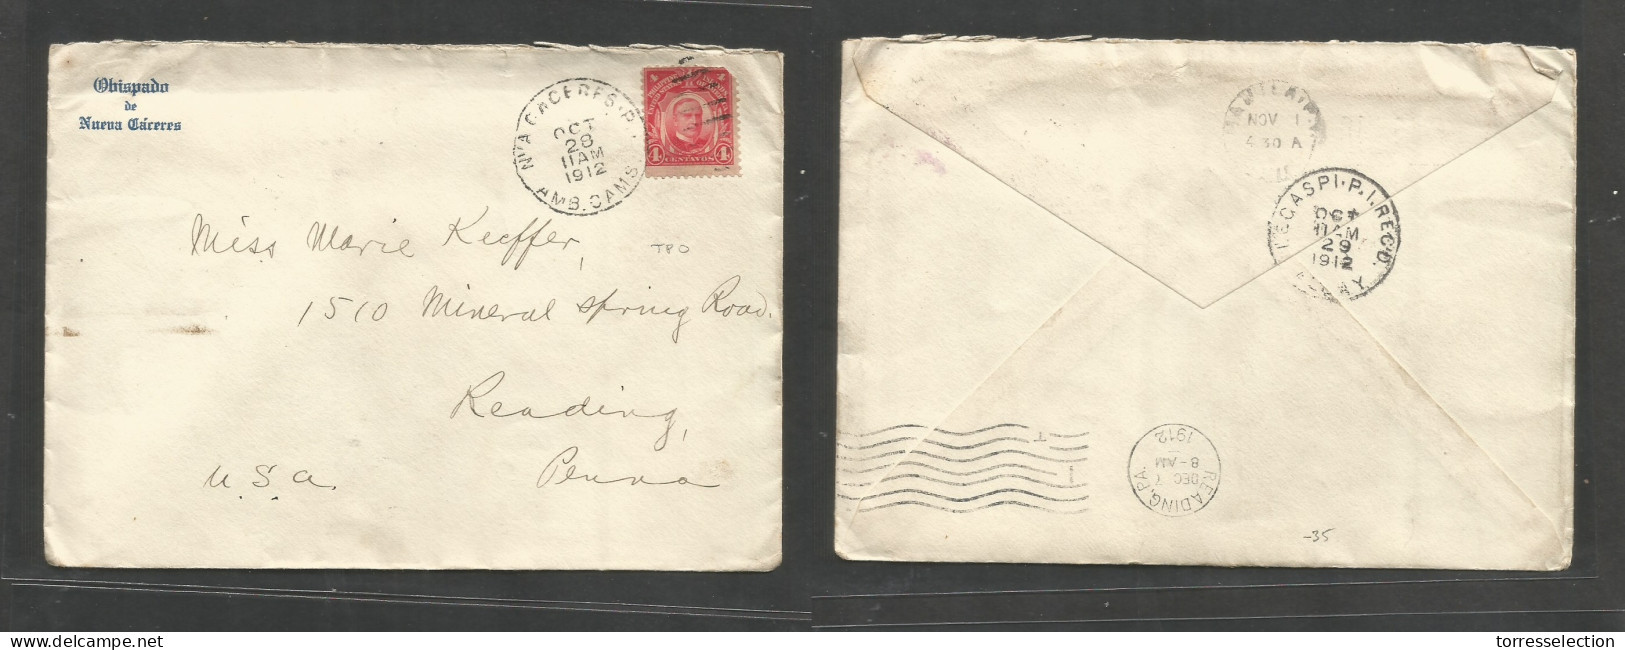 PHILIPPINES. 1912 (Oct 28) Nueva Caceres, Aub Cams - USA, Reading, PA (Dec 7) Obispado Fkd Envelope, TPO Cds. Reverse Tr - Filipinas